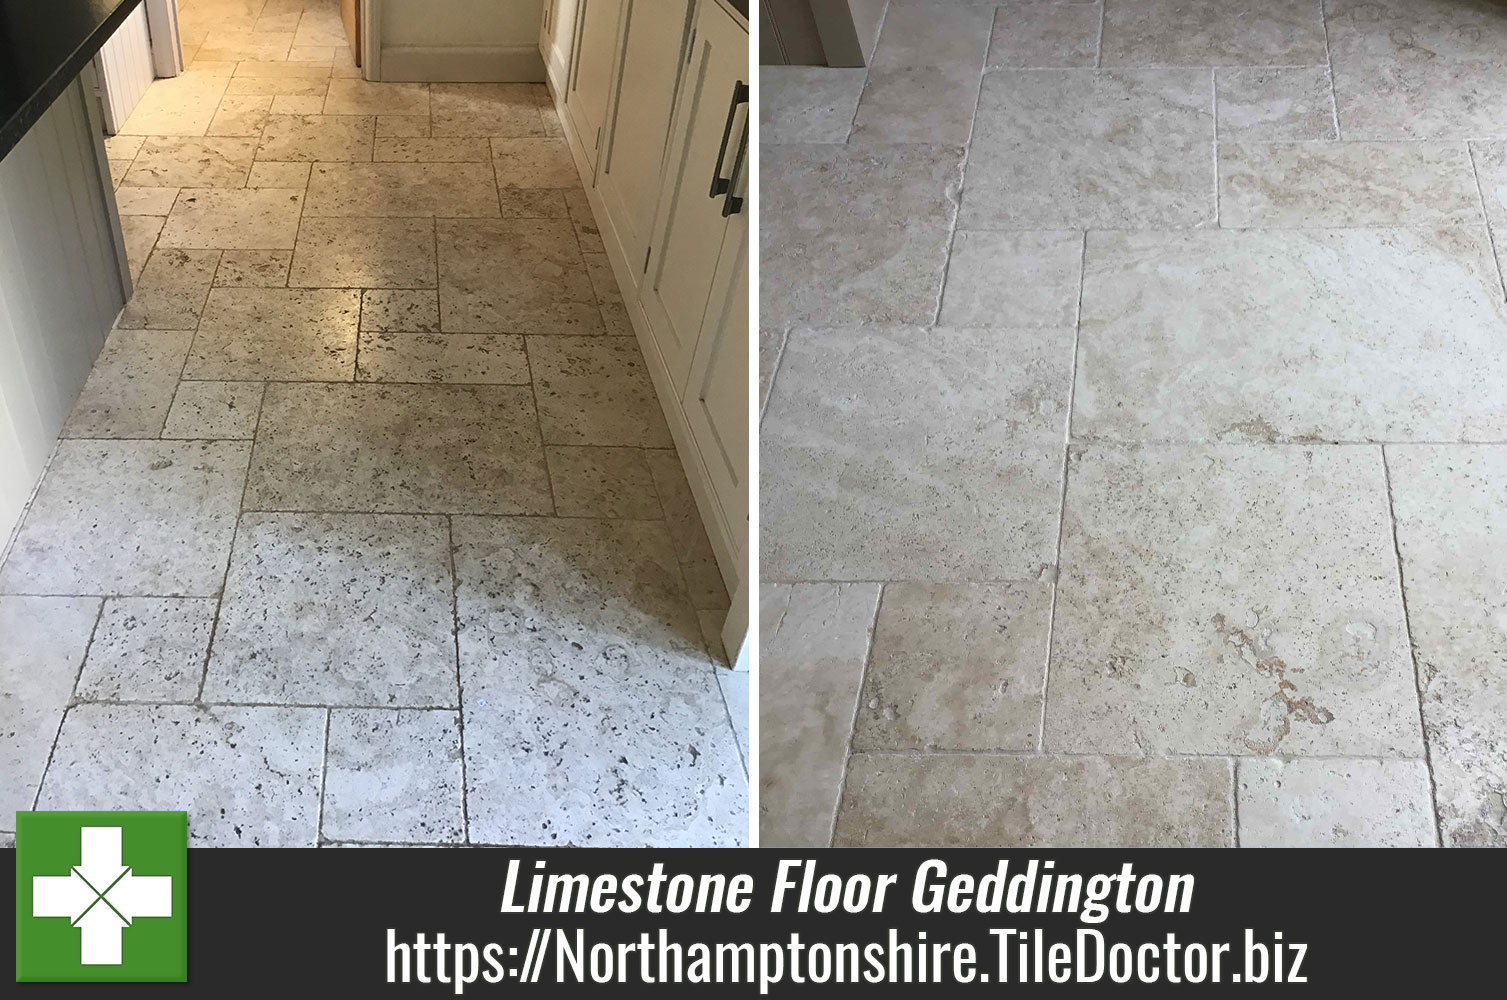 Polishing a Limestone Tiled Kitchen Floor with Tile Doctor Burnishing Pads in Geddington Northants